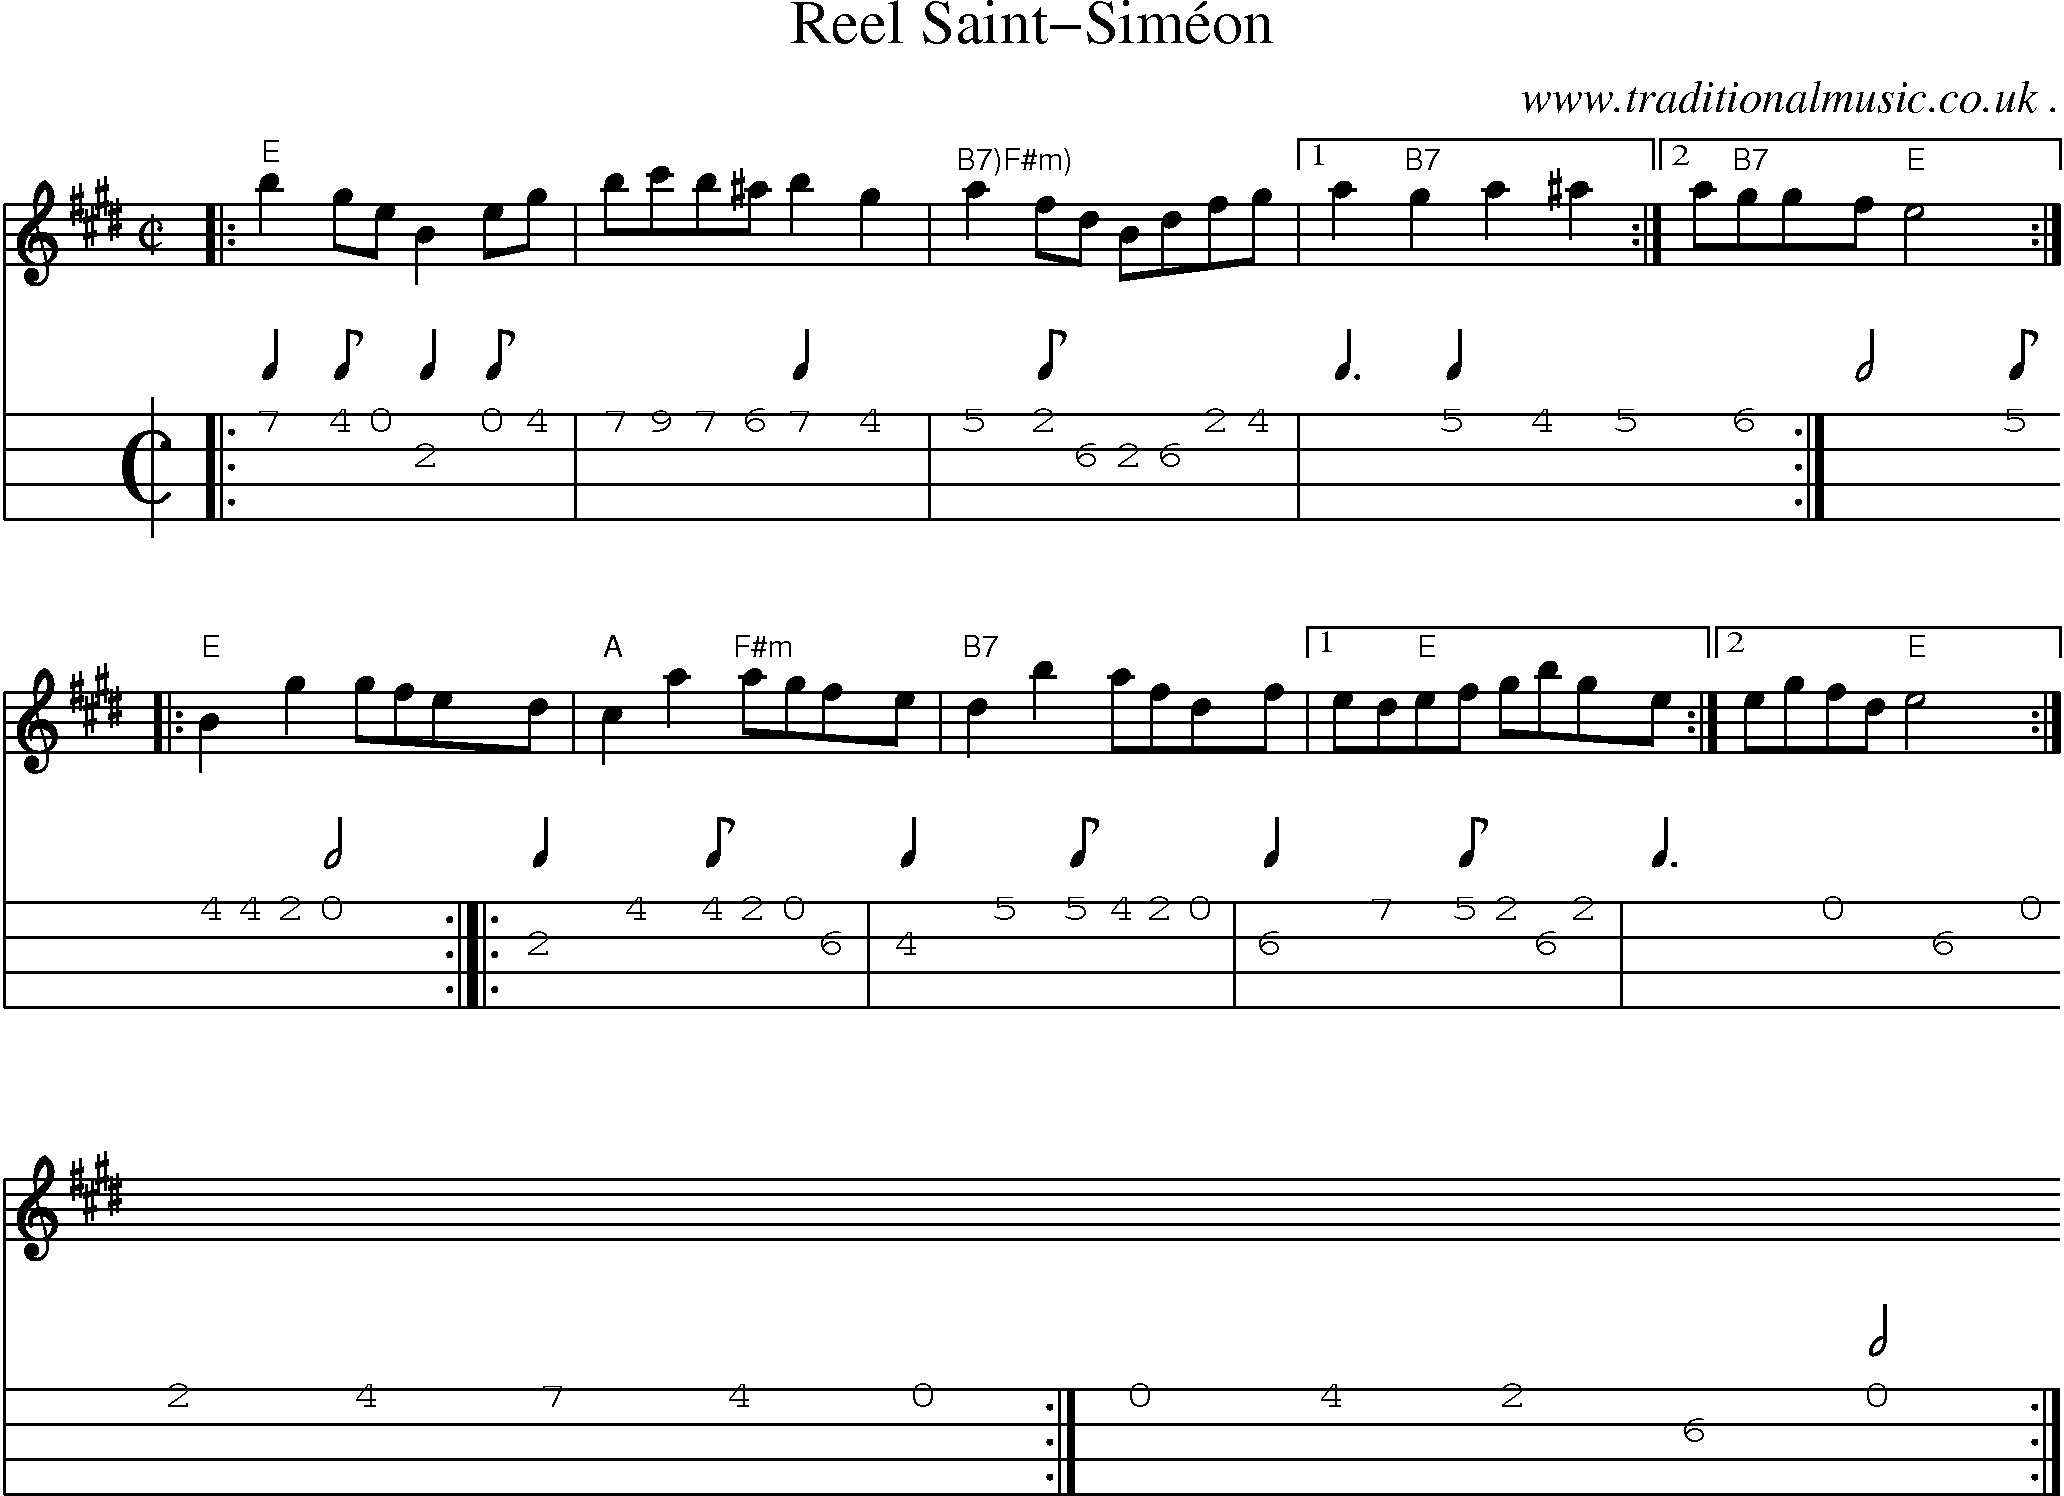 Sheet-Music and Mandolin Tabs for Reel Saint-simeon